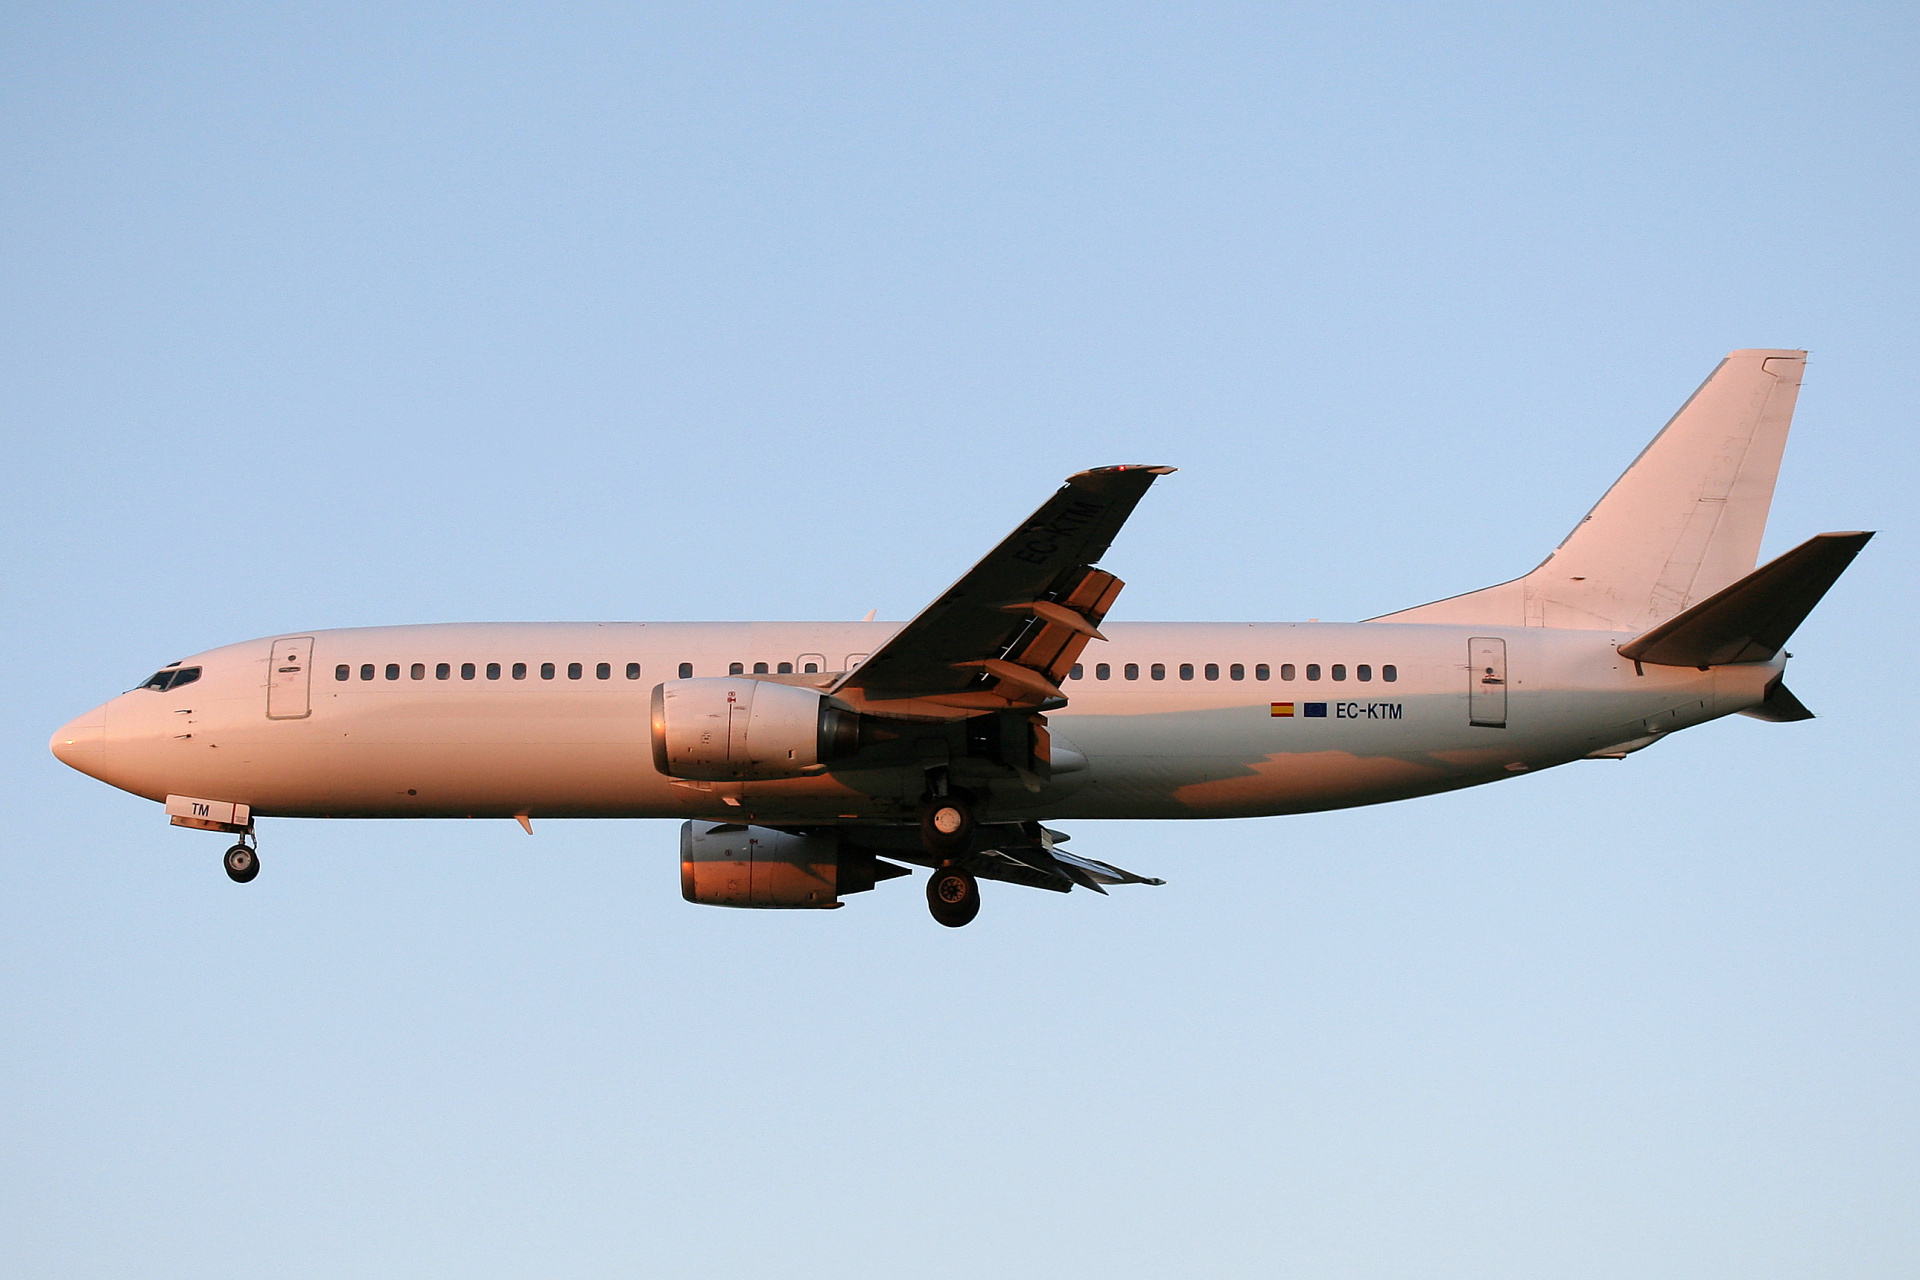 EC-KTM, Futura International Airlines (Aircraft » EPWA Spotting » Boeing 737-400)